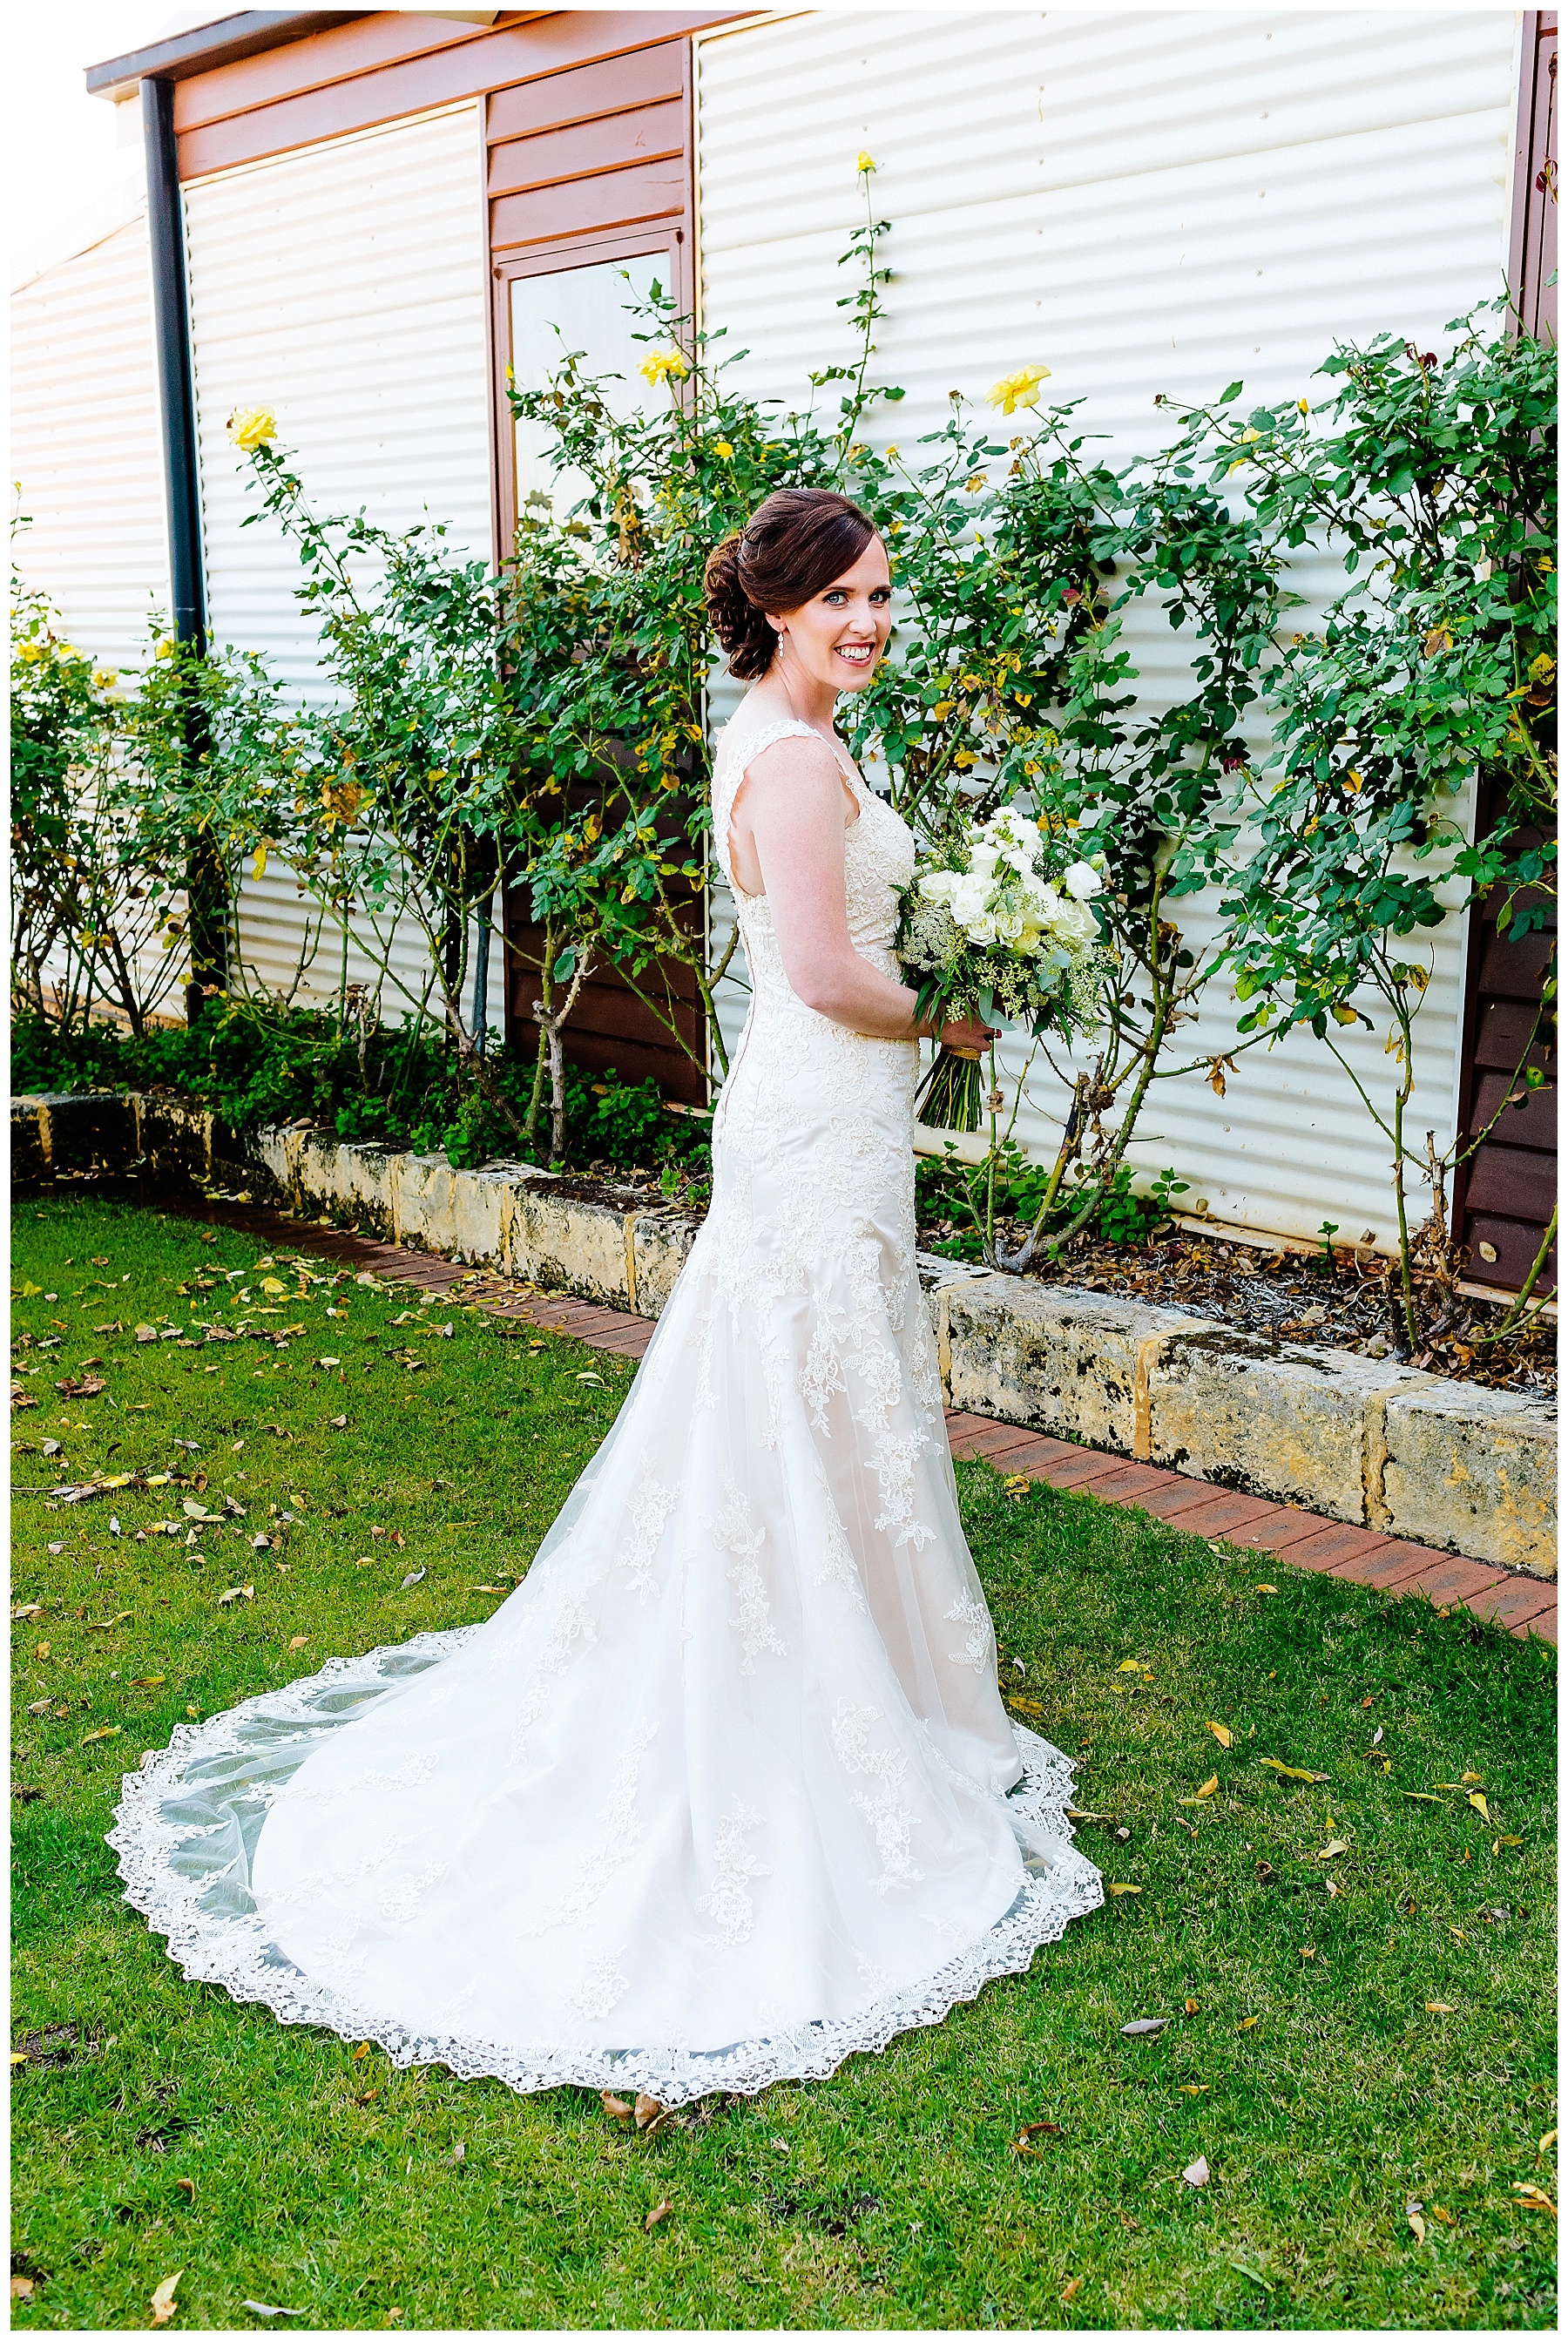 lace wedding dress 